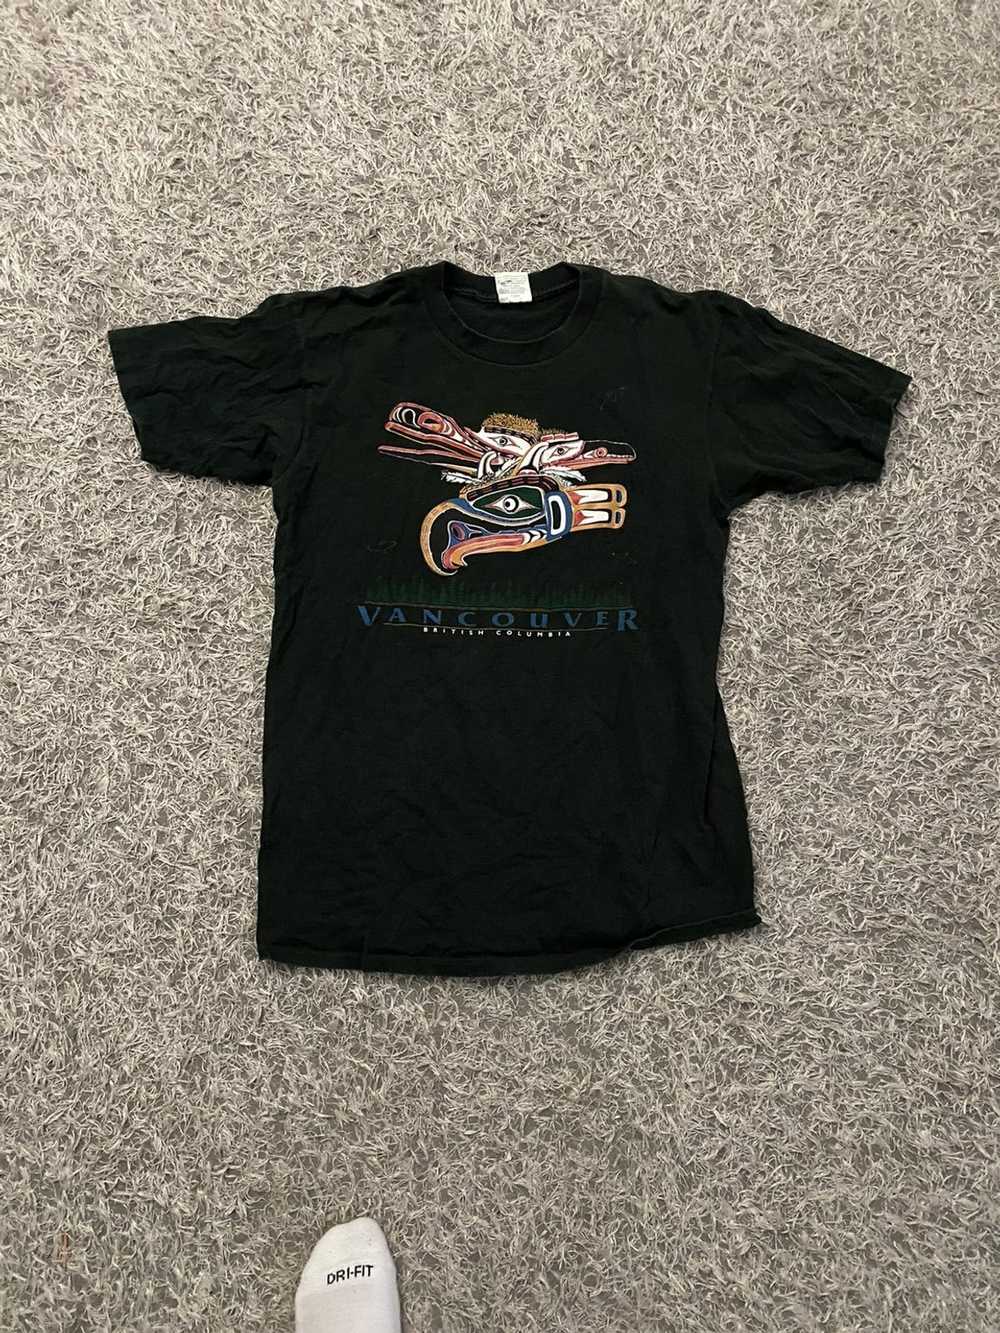 Vintage Vintage Vancouver t shirt - image 1